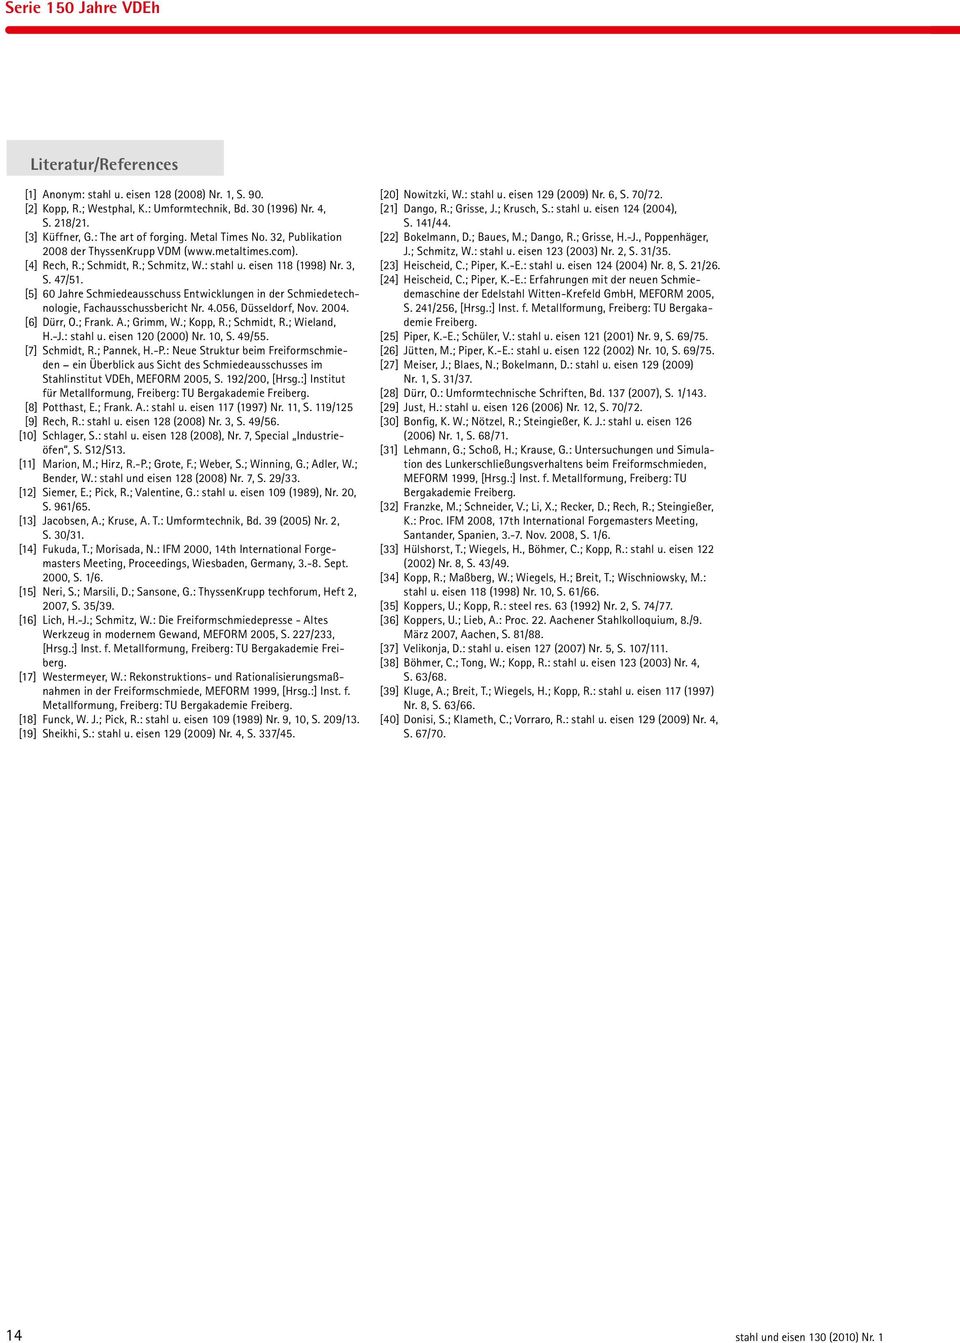 [5] 60 Jahre Schmiedeausschuss Entwicklungen in der Schmiedetechnologie, Fachausschussbericht Nr. 4.056, Düsseldorf, Nov. 2004. [6] Dürr, O.; Frank. A.; Grimm, W.; Kopp, R.; Schmidt, R.; Wieland, H.